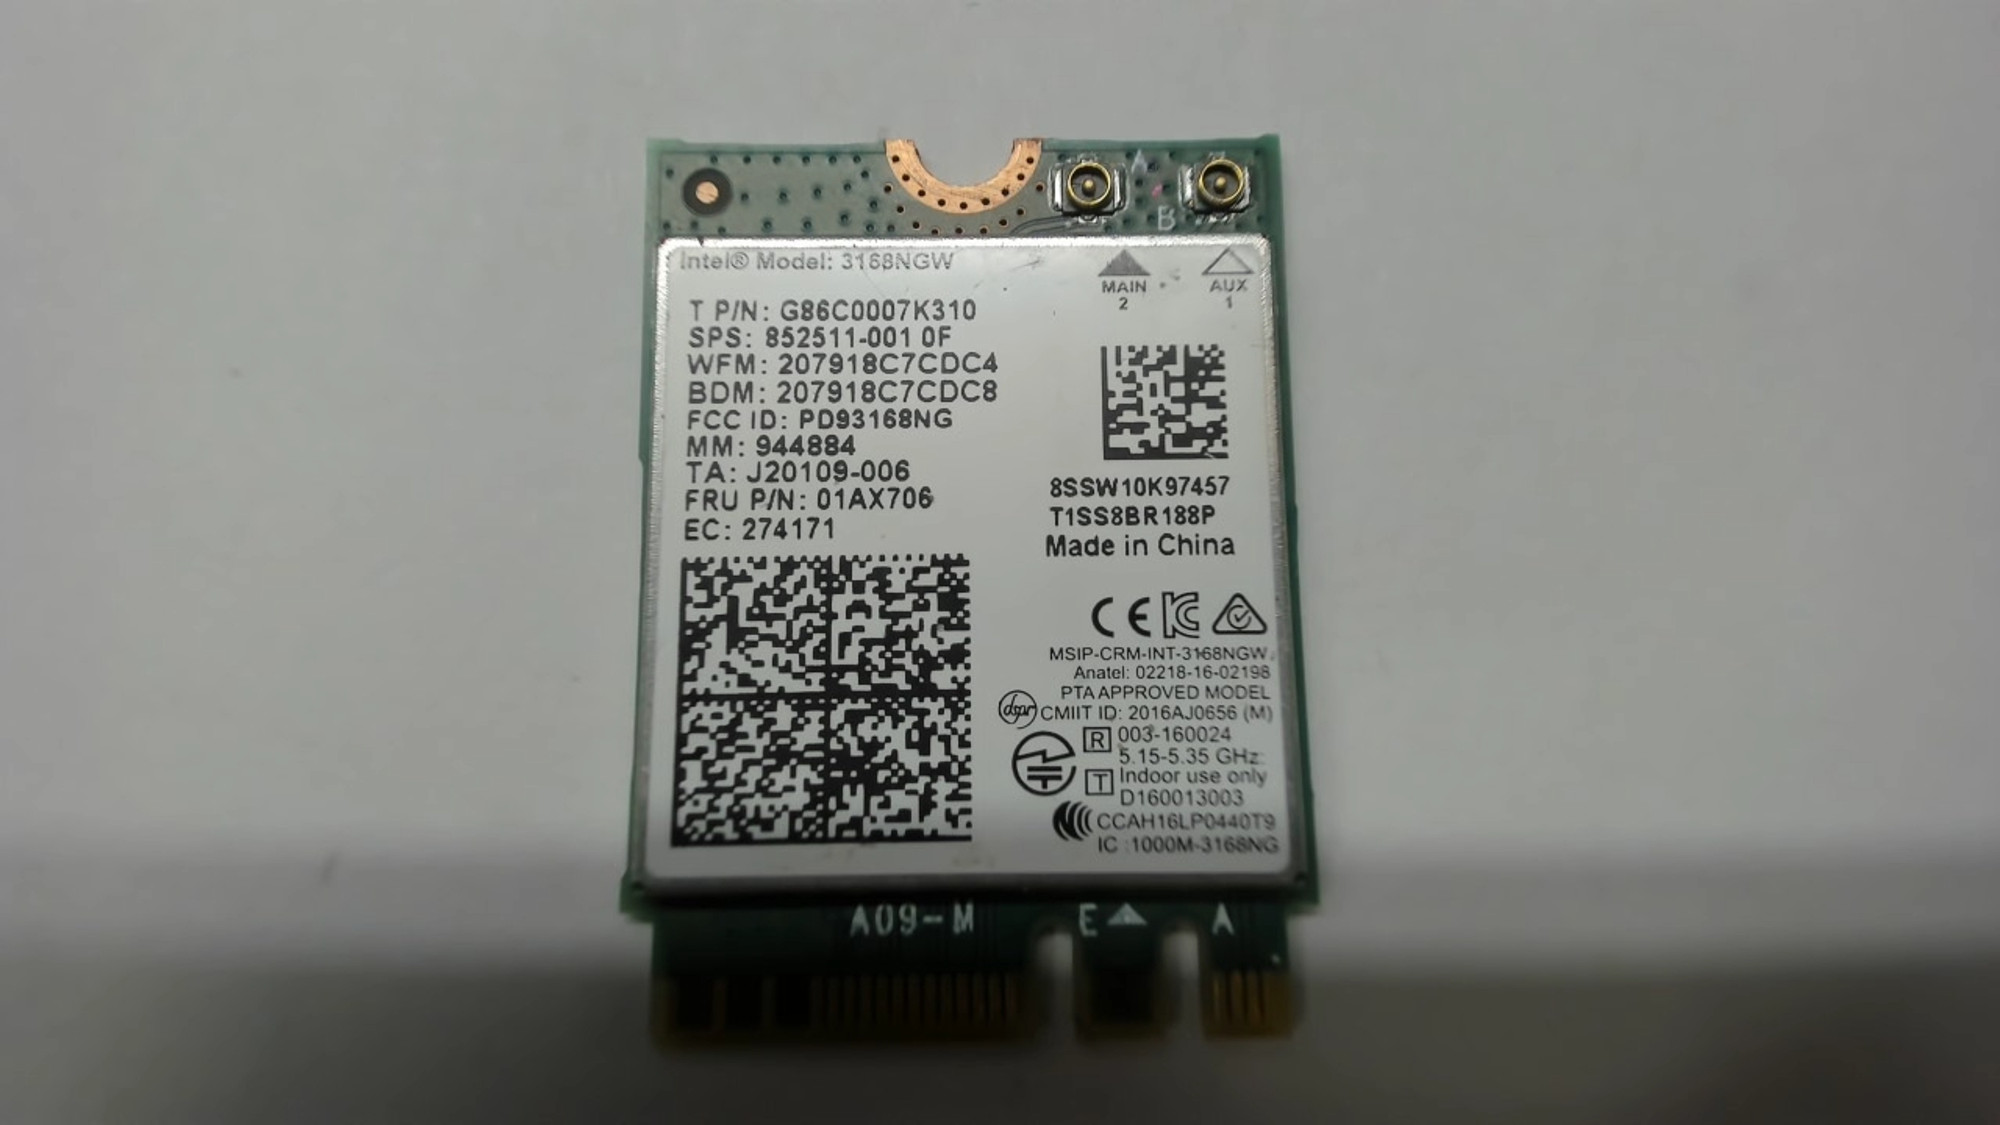 HP Intel 3168NGW Dual Band Wireless-AC 3168 802.11 Ac WiFi + Bluetooth 4.2  - Like New